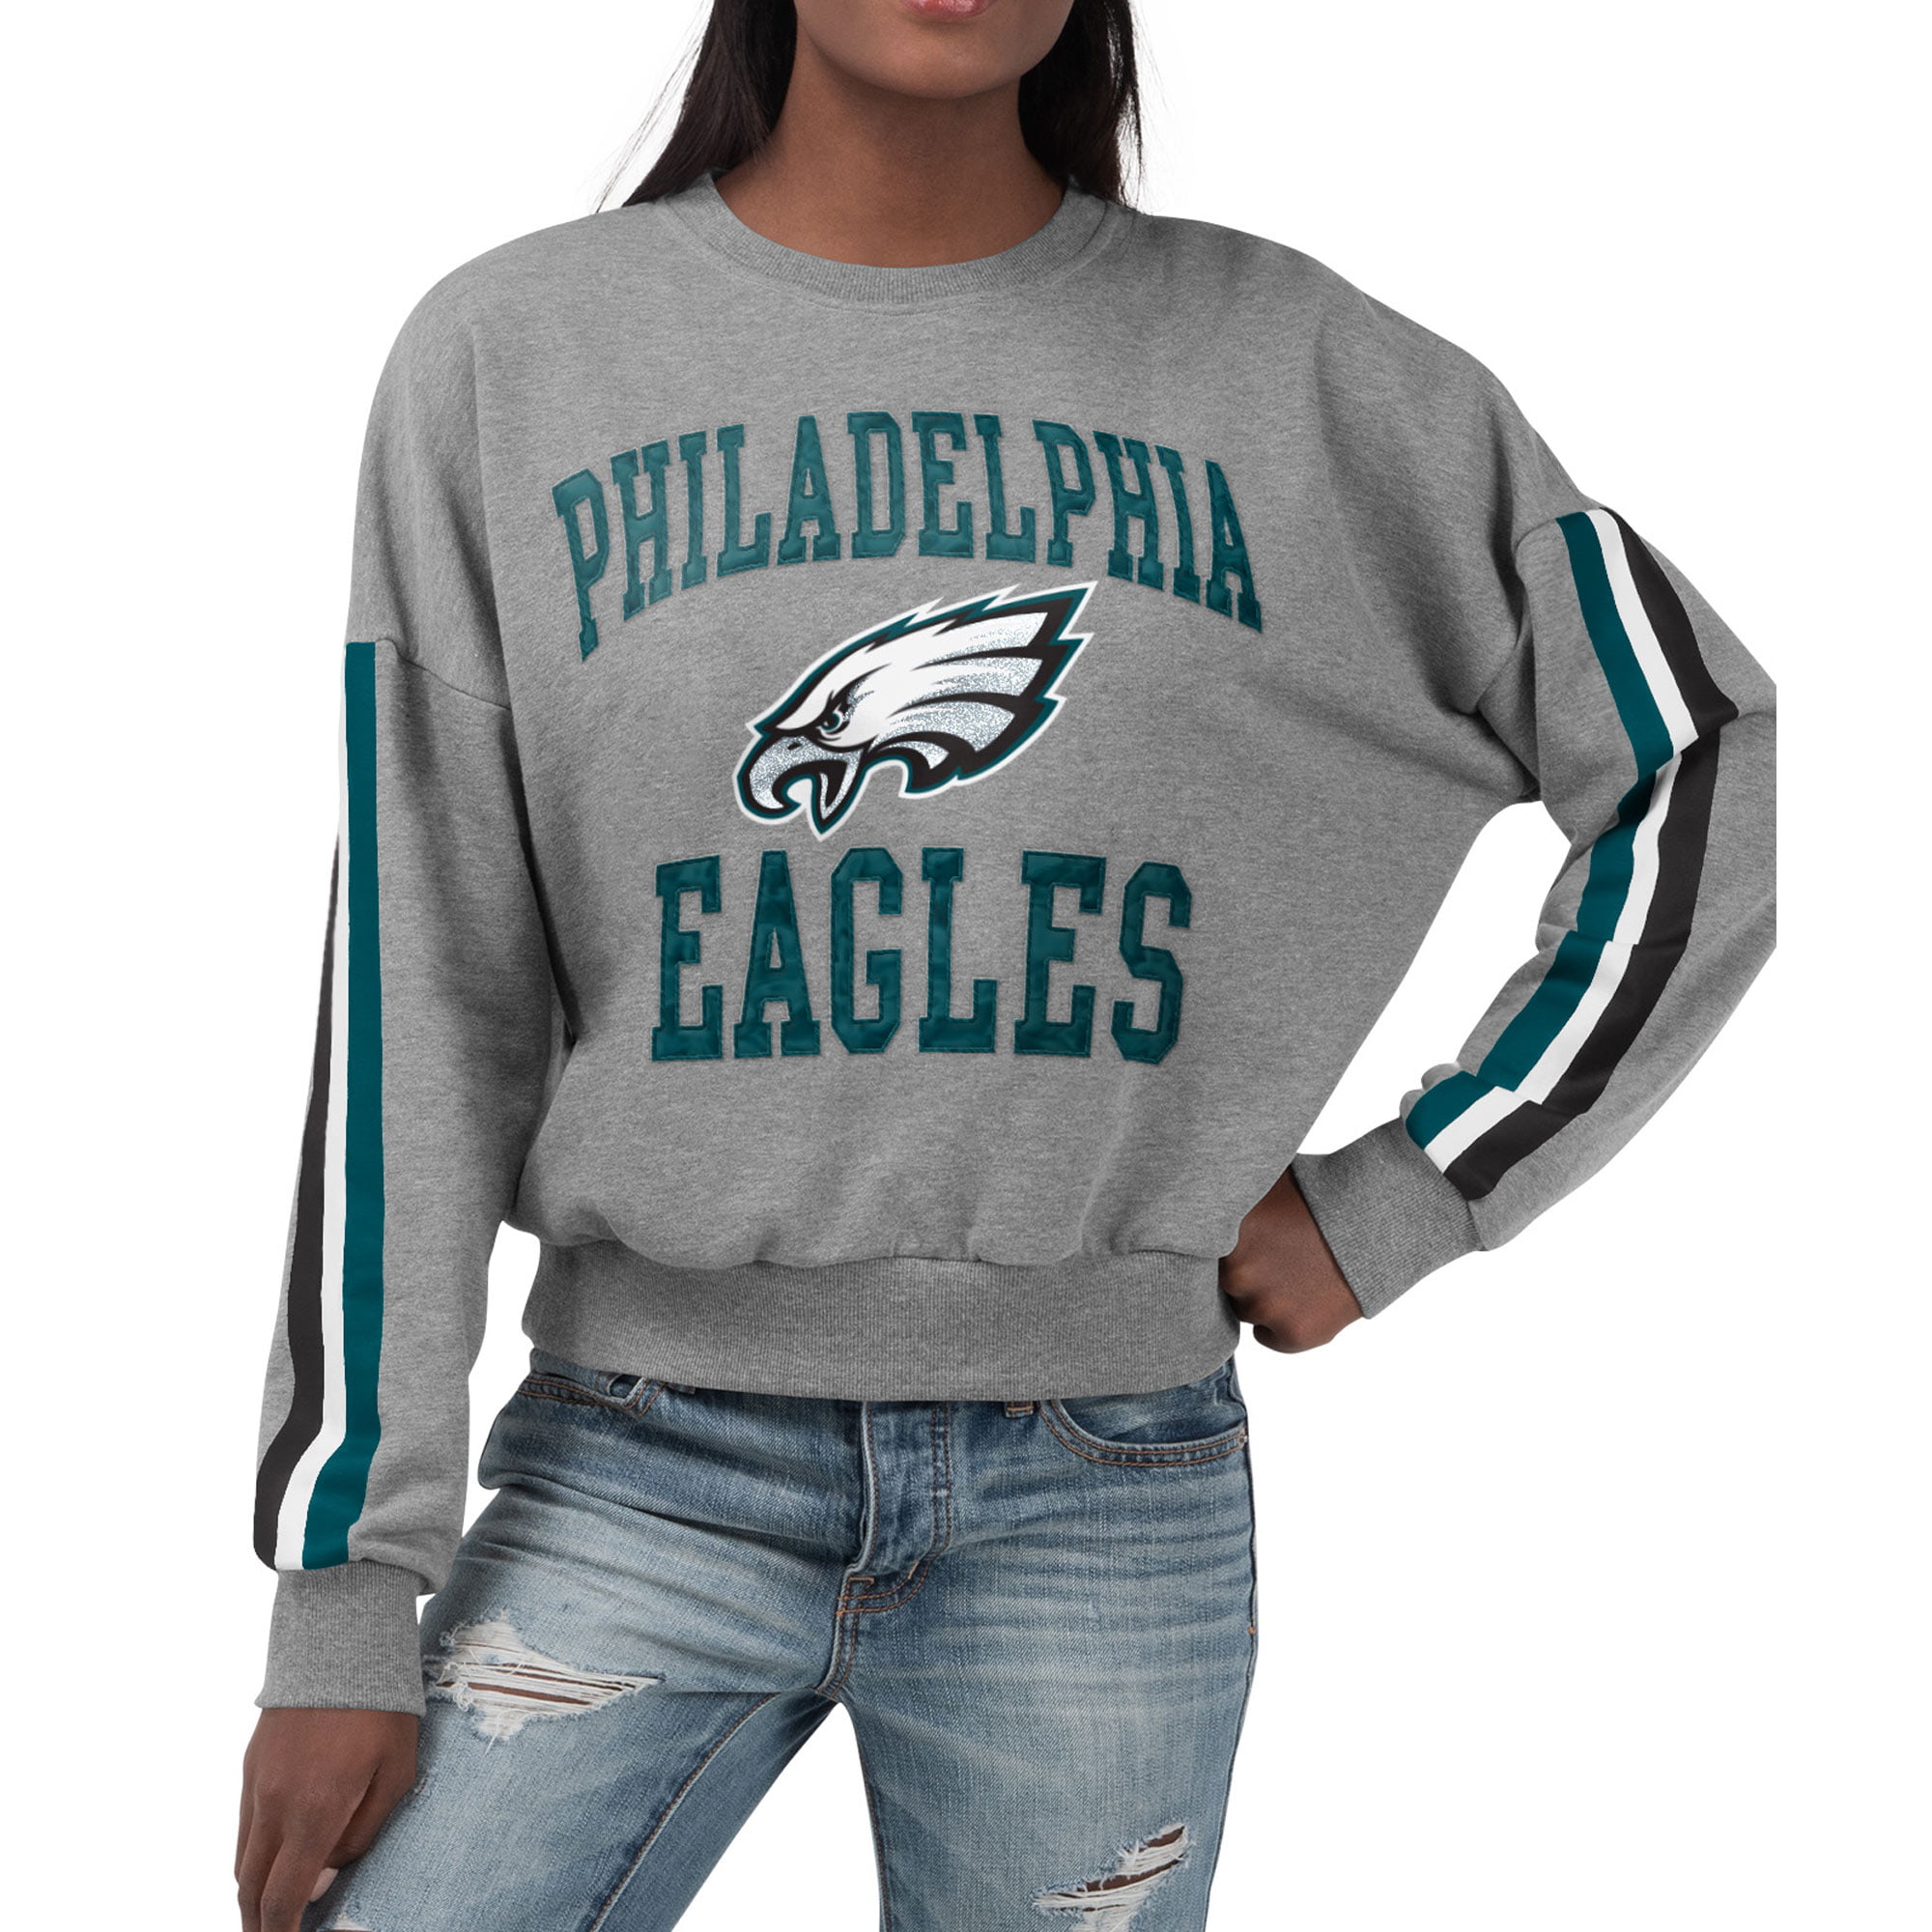 philadelphia eagles women's sweatshirt